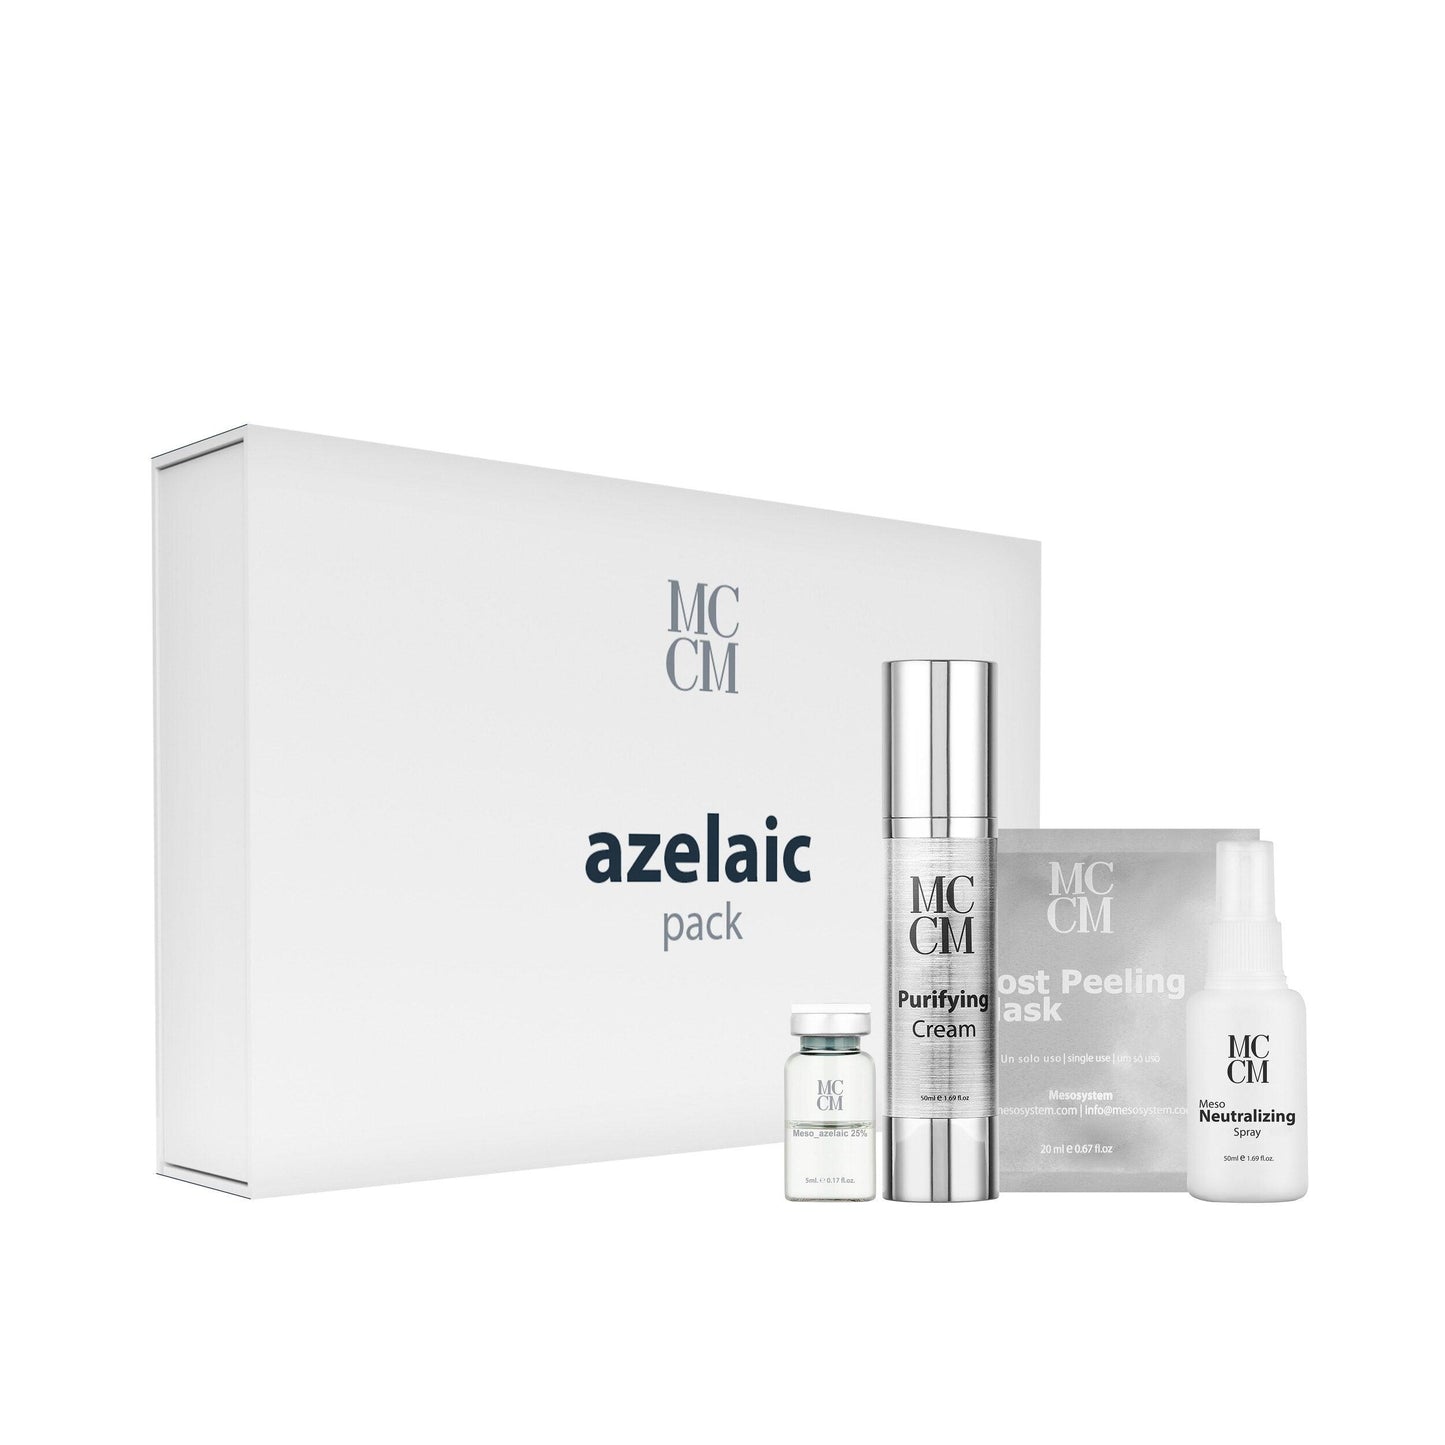 Pack Azelaic - MCCM Medical Cosmetics